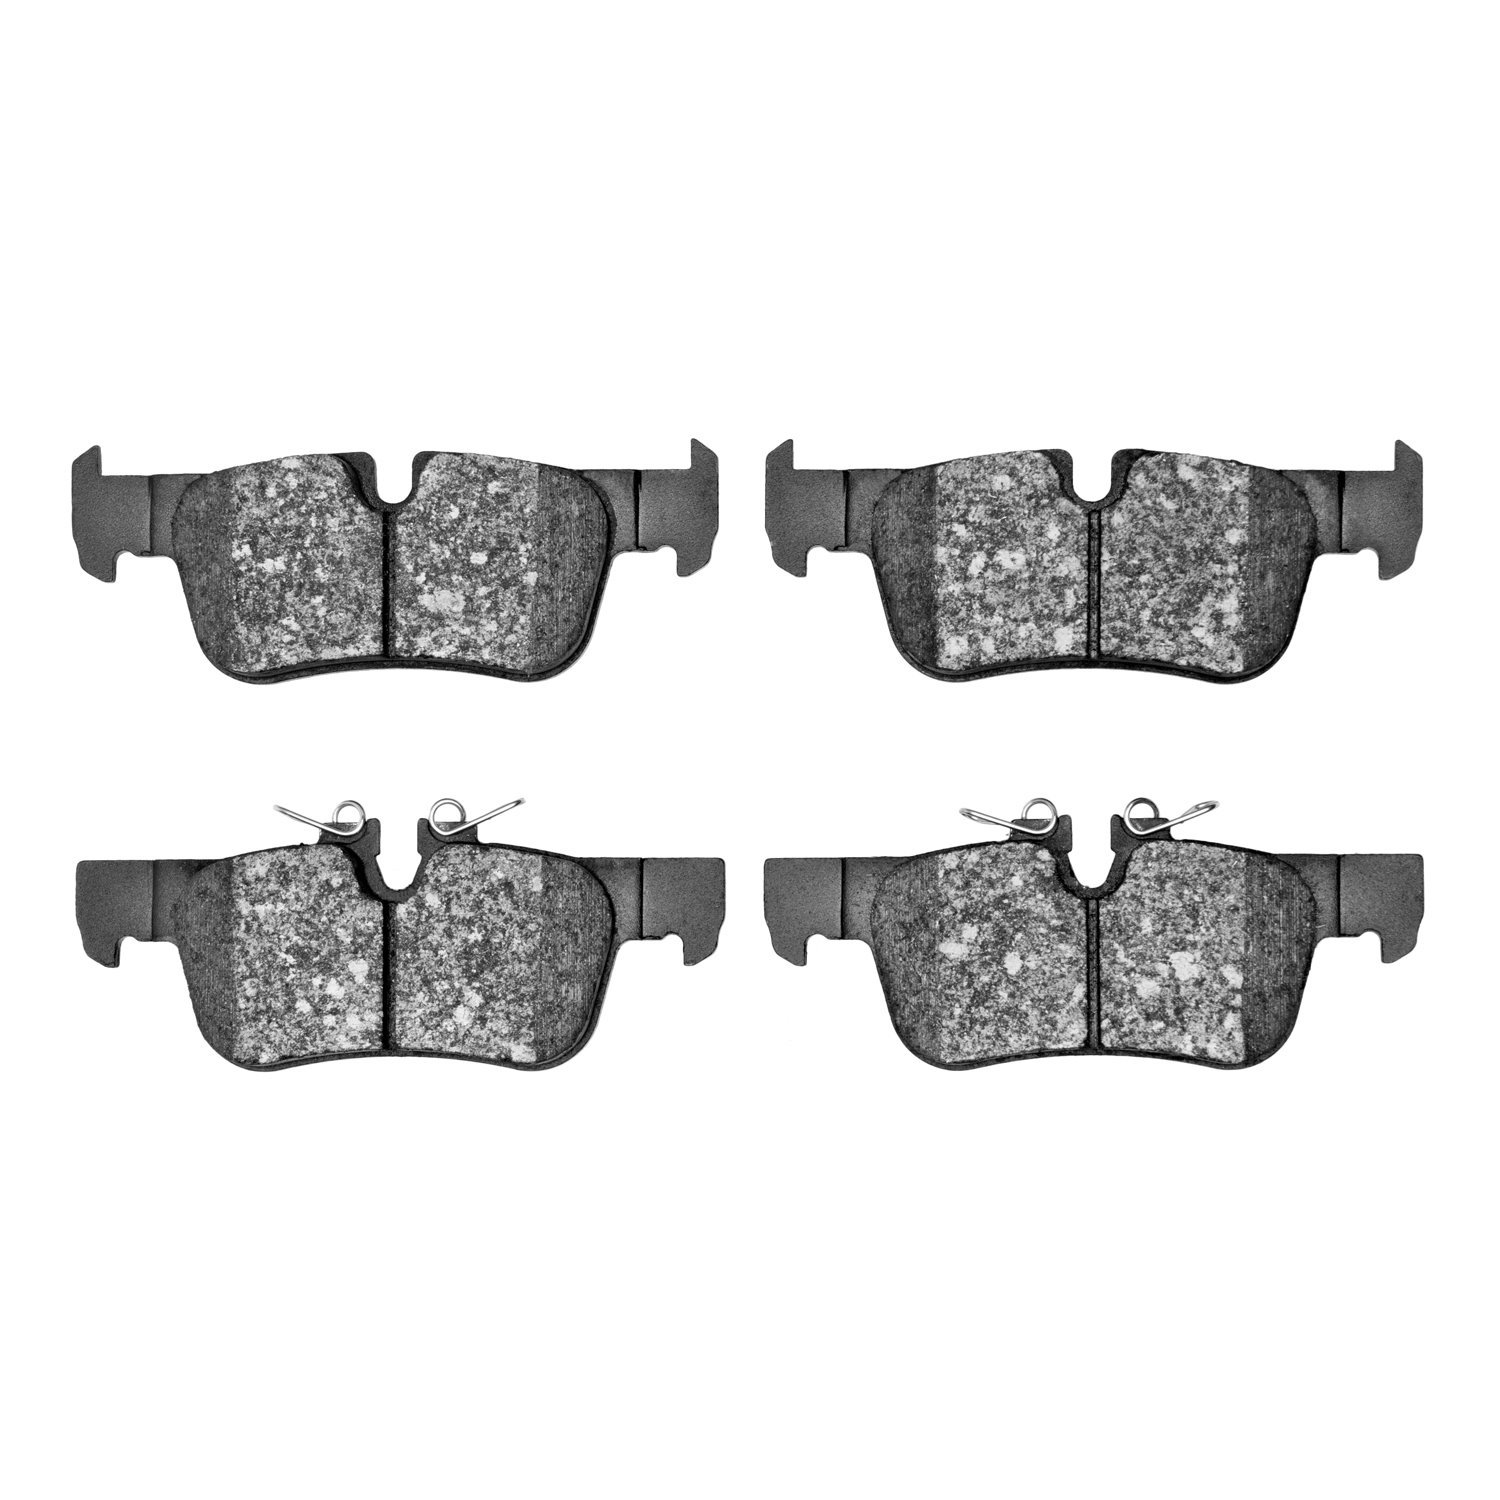 1311-1762-00 3000-Series Semi-Metallic Brake Pads, Fits Select Multiple Makes/Models, Position: Rear